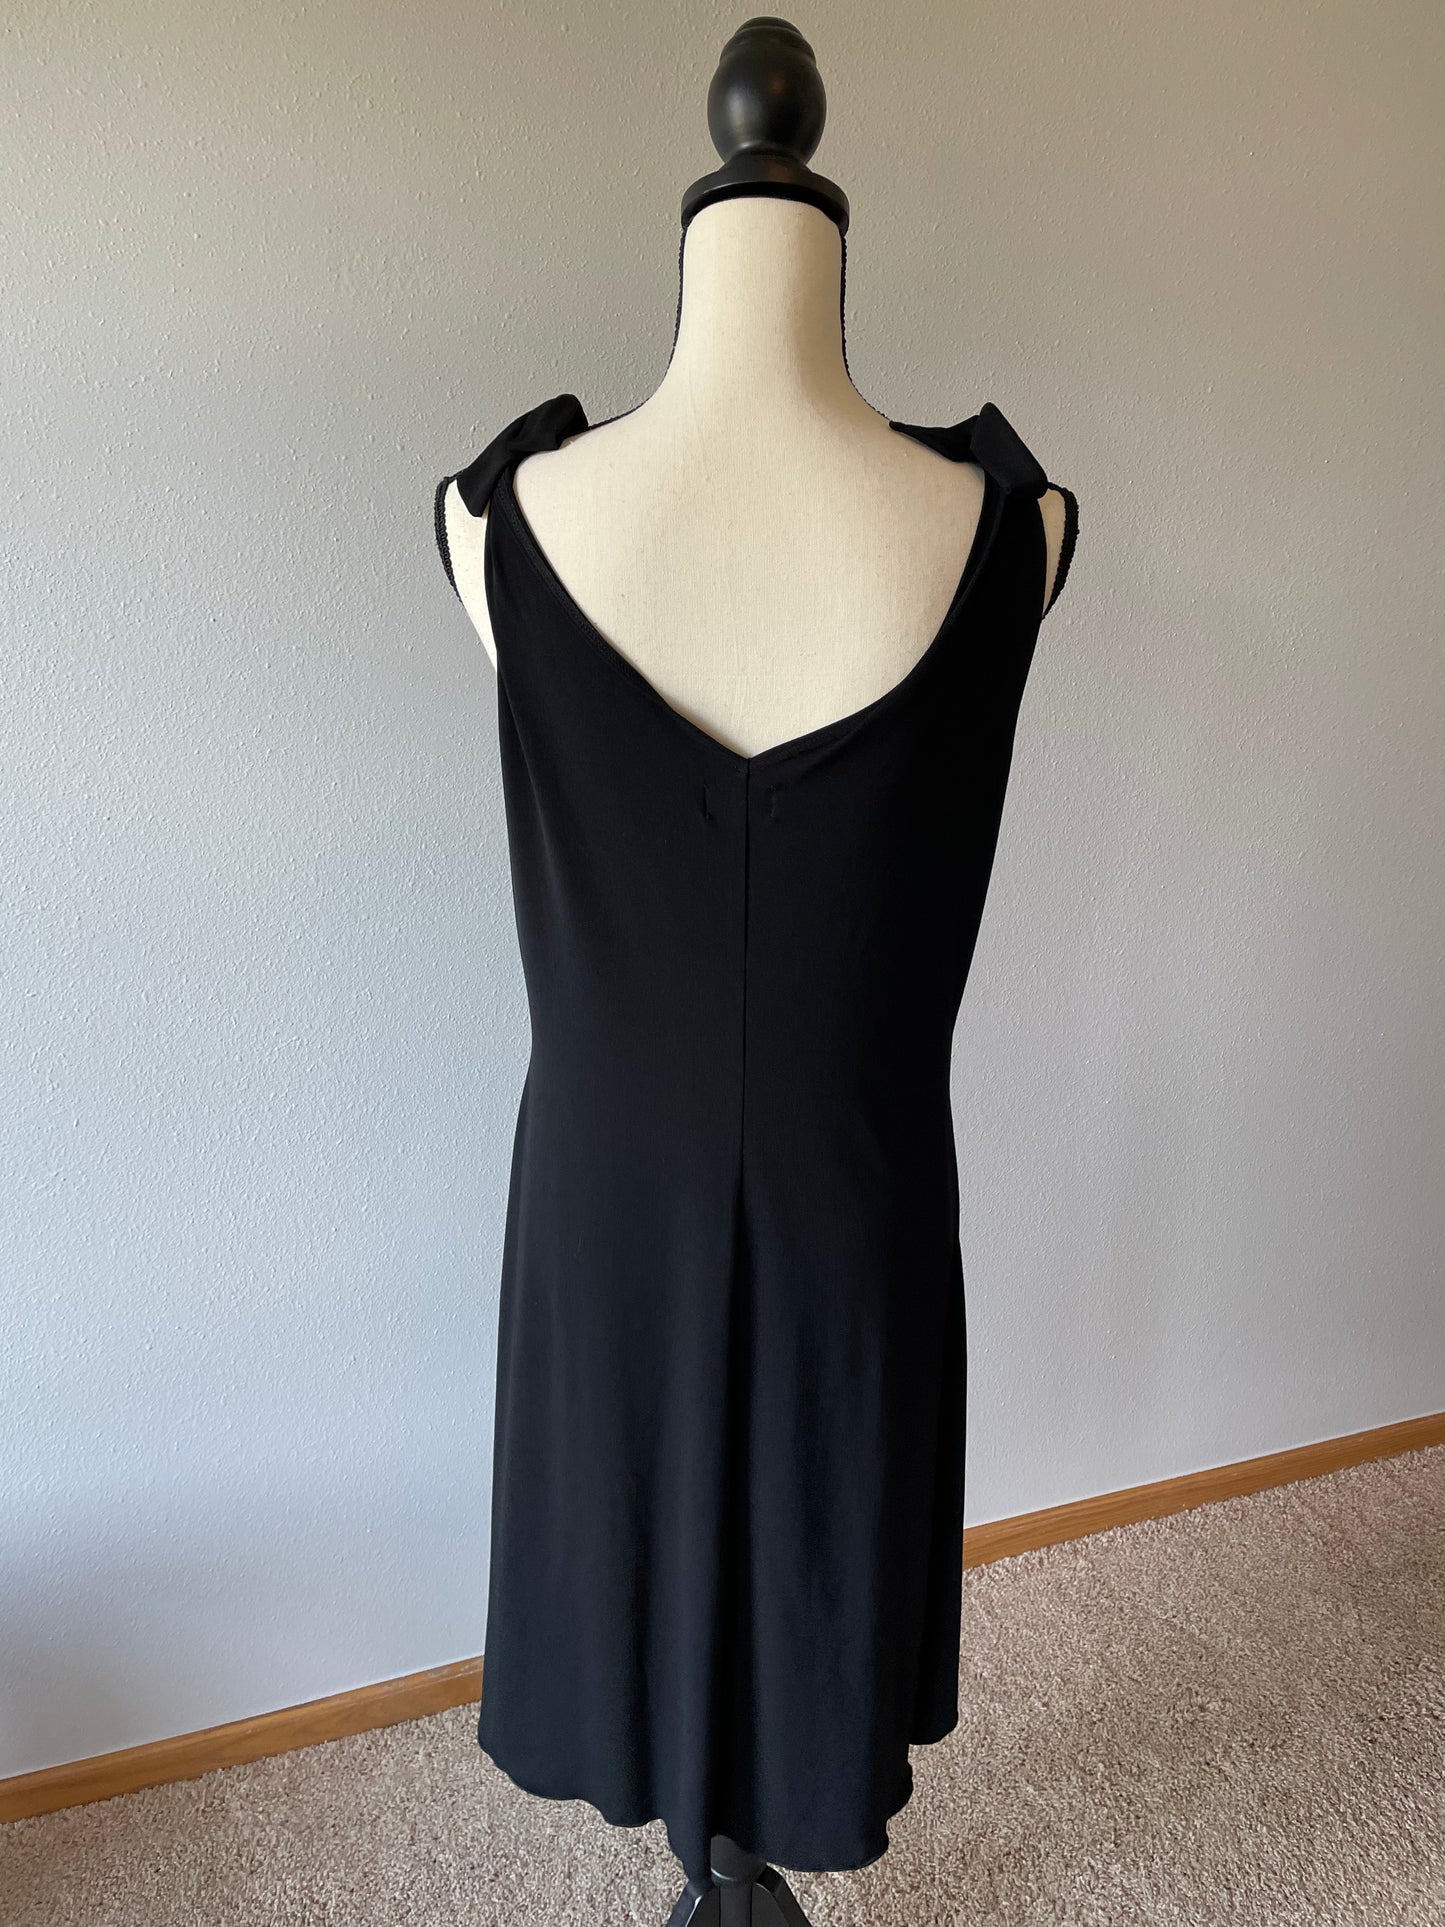 Studio Y Black Dress (XL)